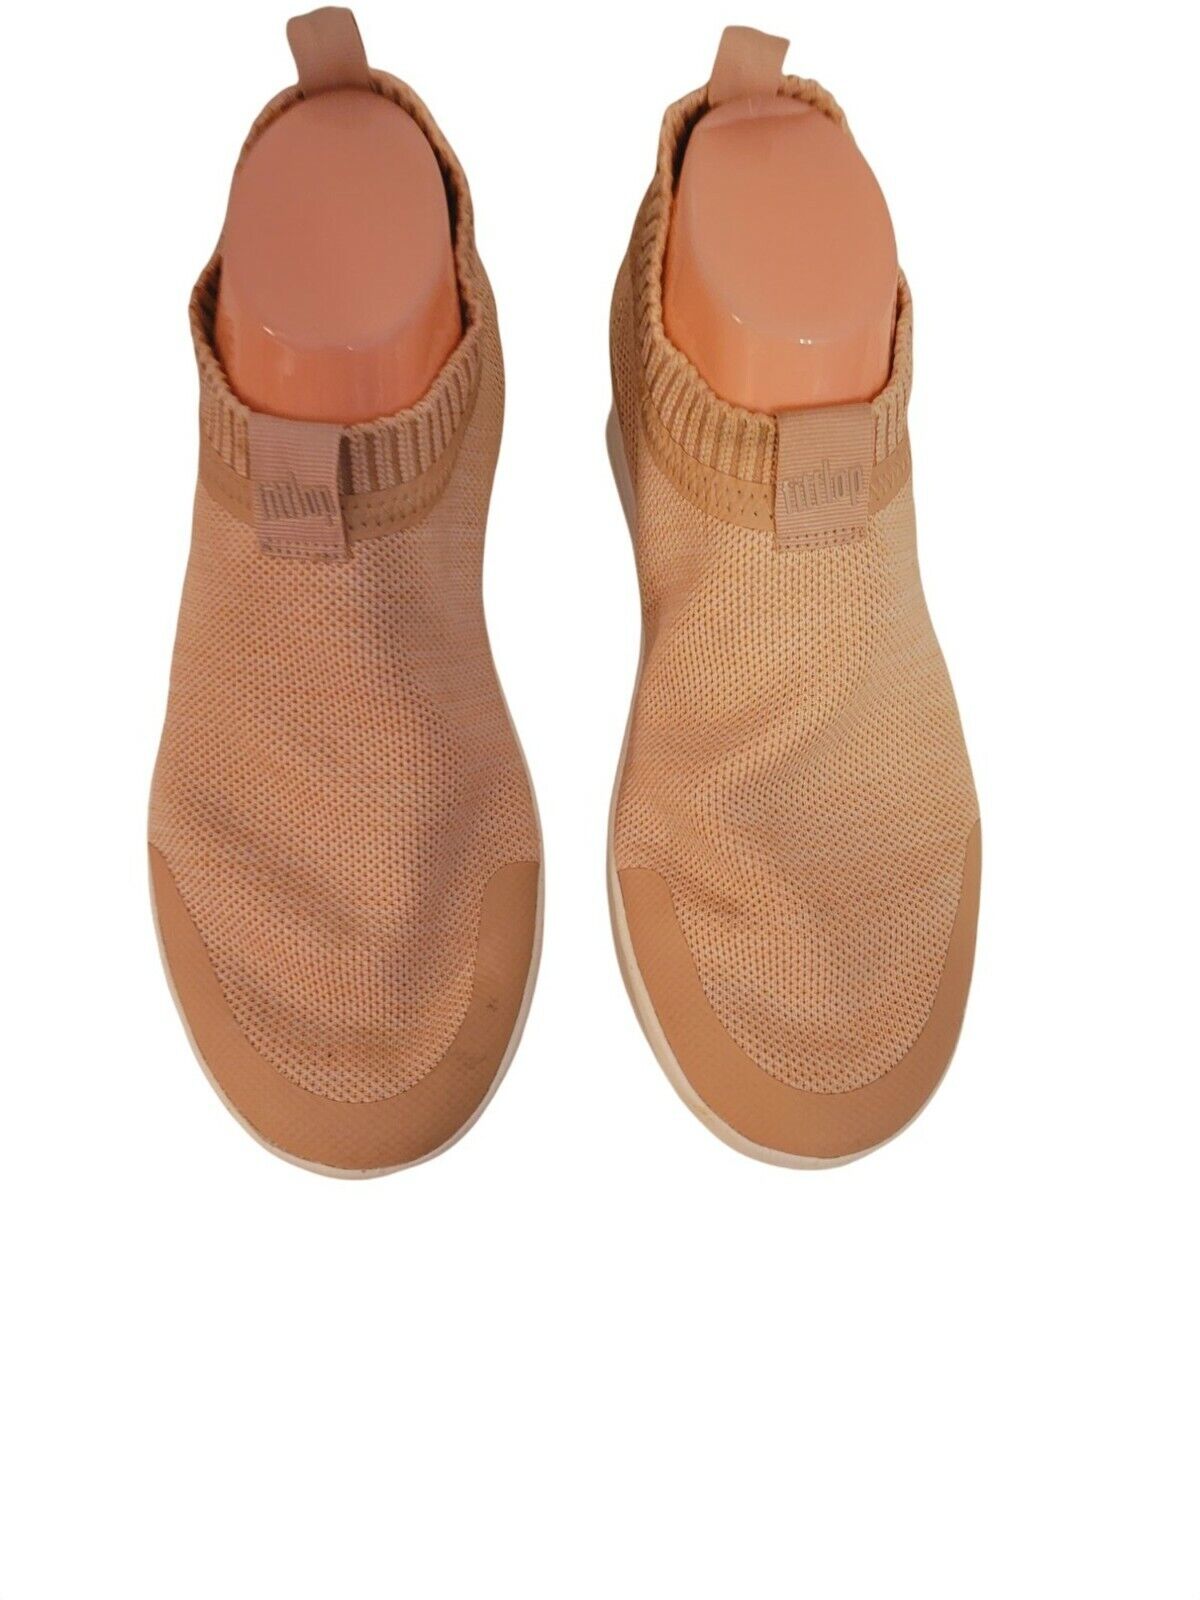 FitFlop ÜBERKNIT Slip-On Sneakers Pink Size 11 - image 5